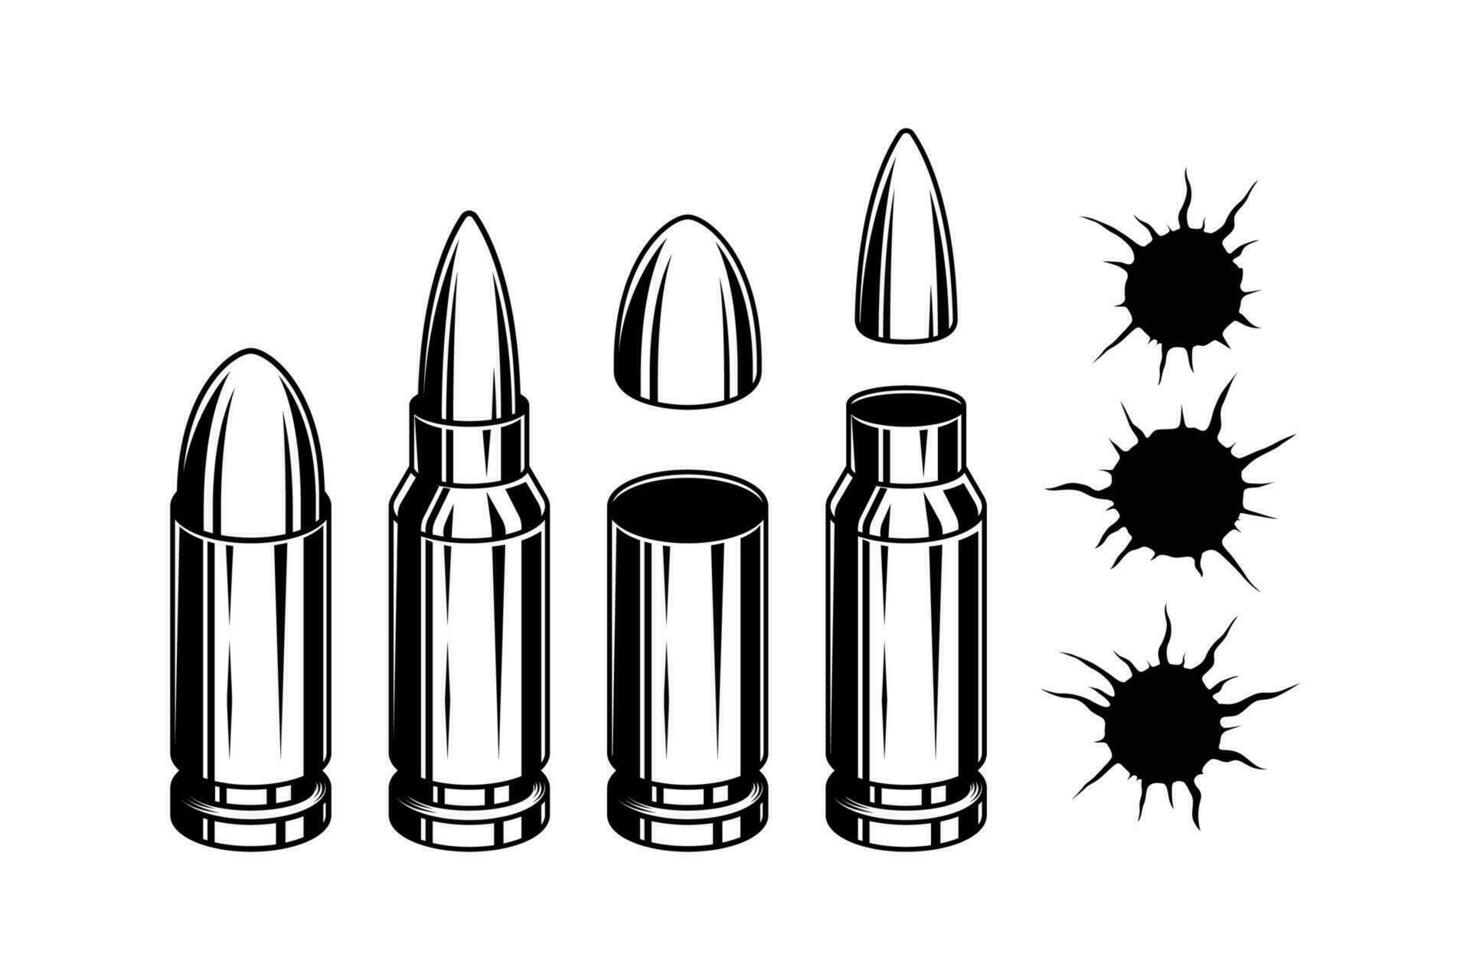 Kugeln und Kugel Löcher isoliert Vektor Illustration.